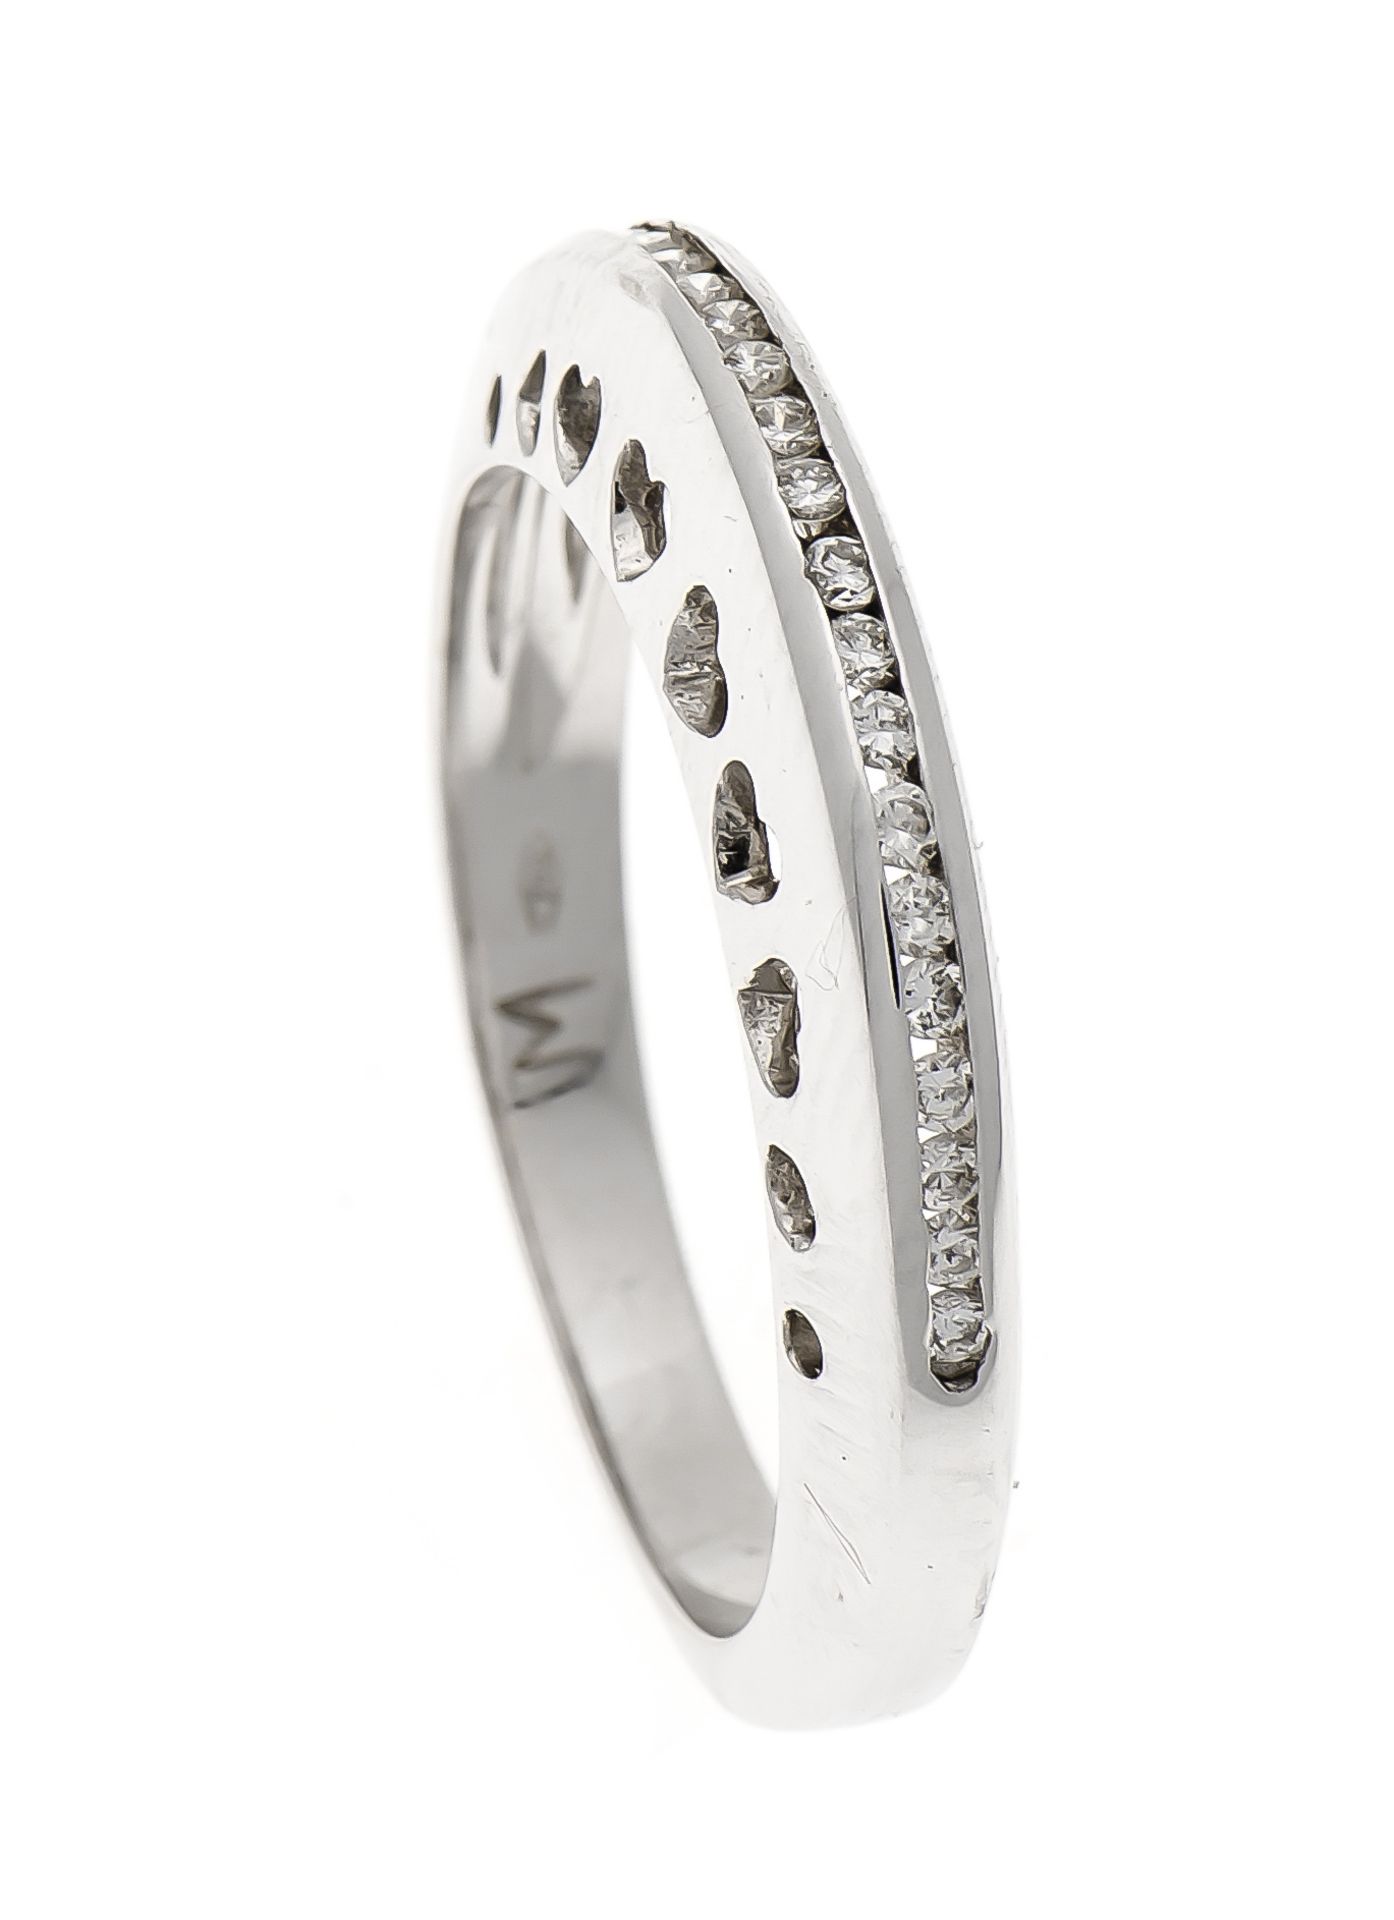 Brillant-Ring WG 750/000 mit Brillanten, zus. 0,19 ct TW/VS, RG 55, 4,2 g, ehemal. UVP.Euro 1.148,-